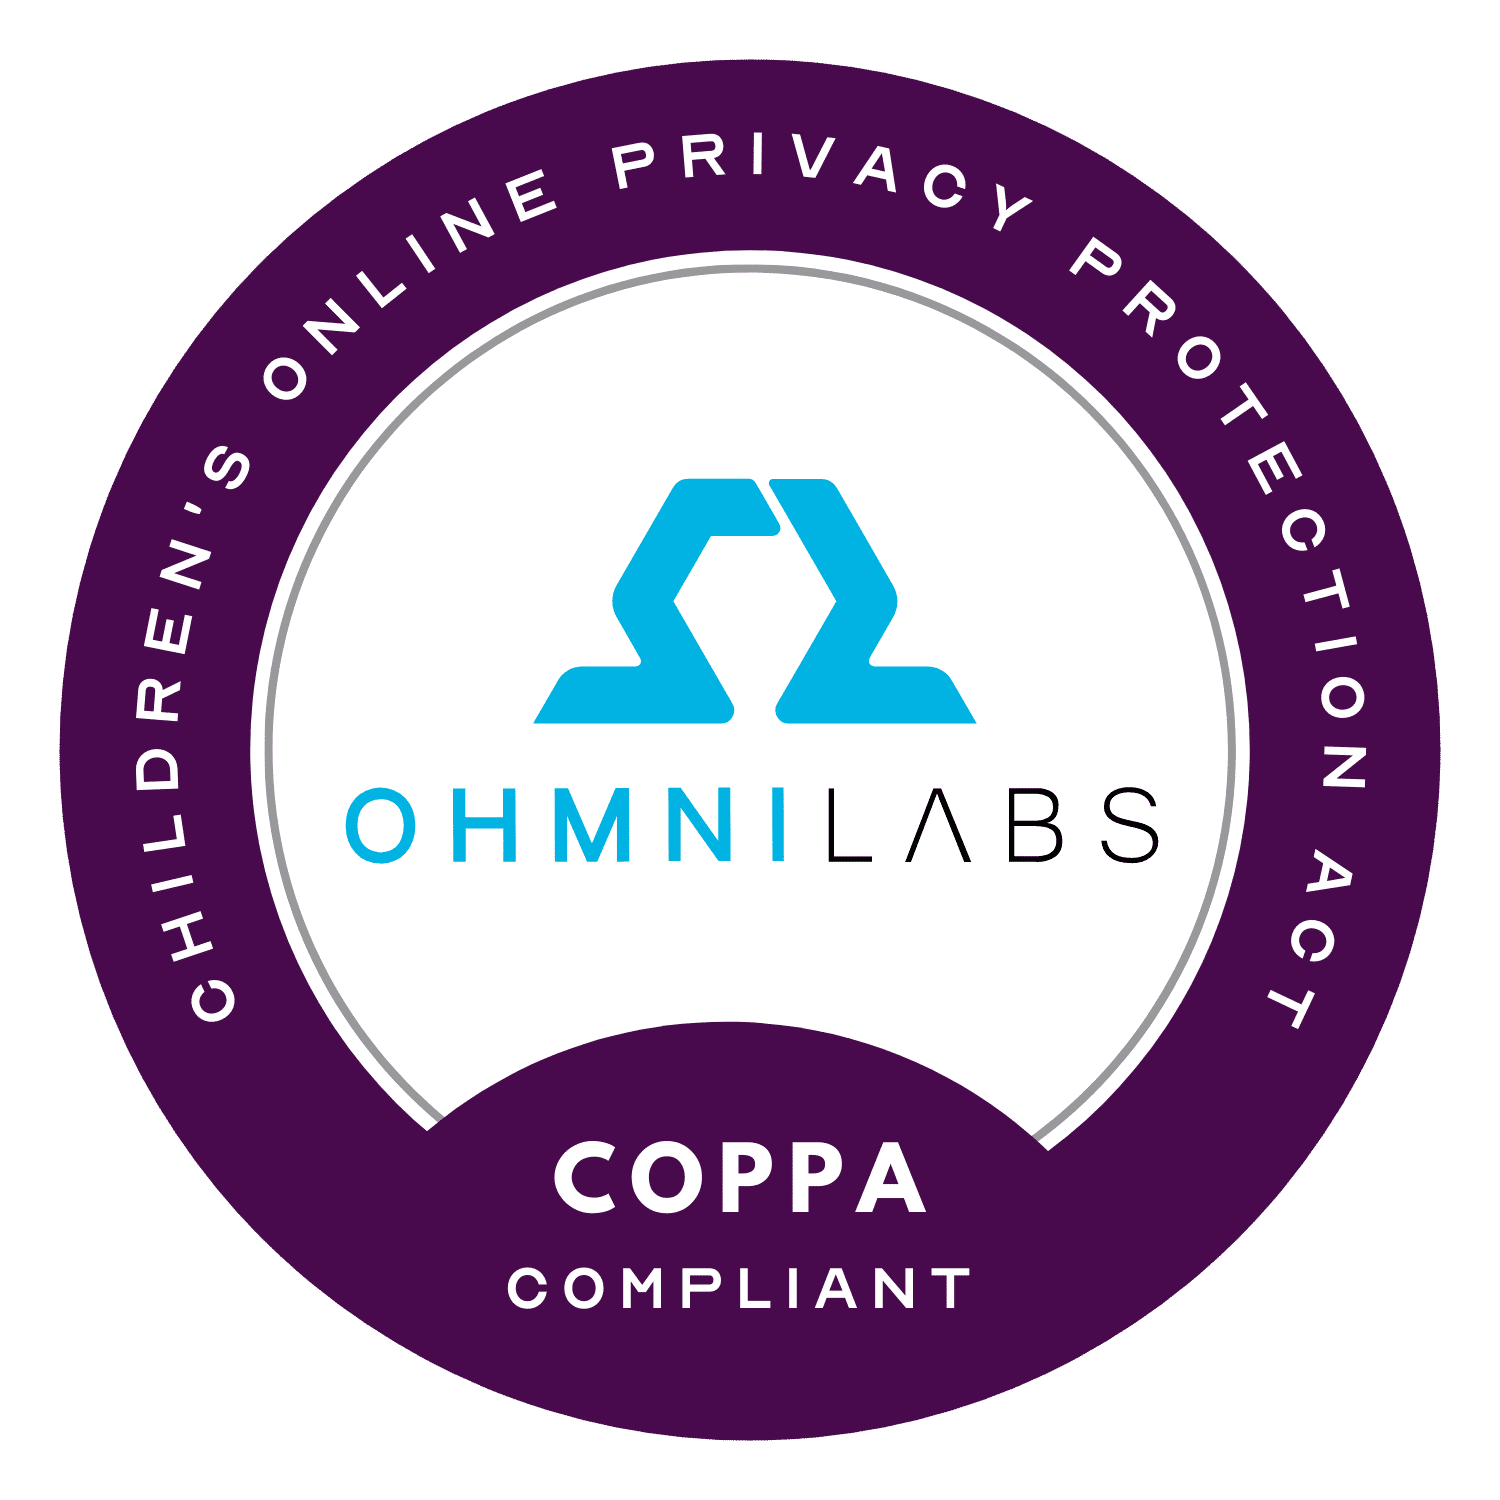 OhmniLabs COPPA Compliant